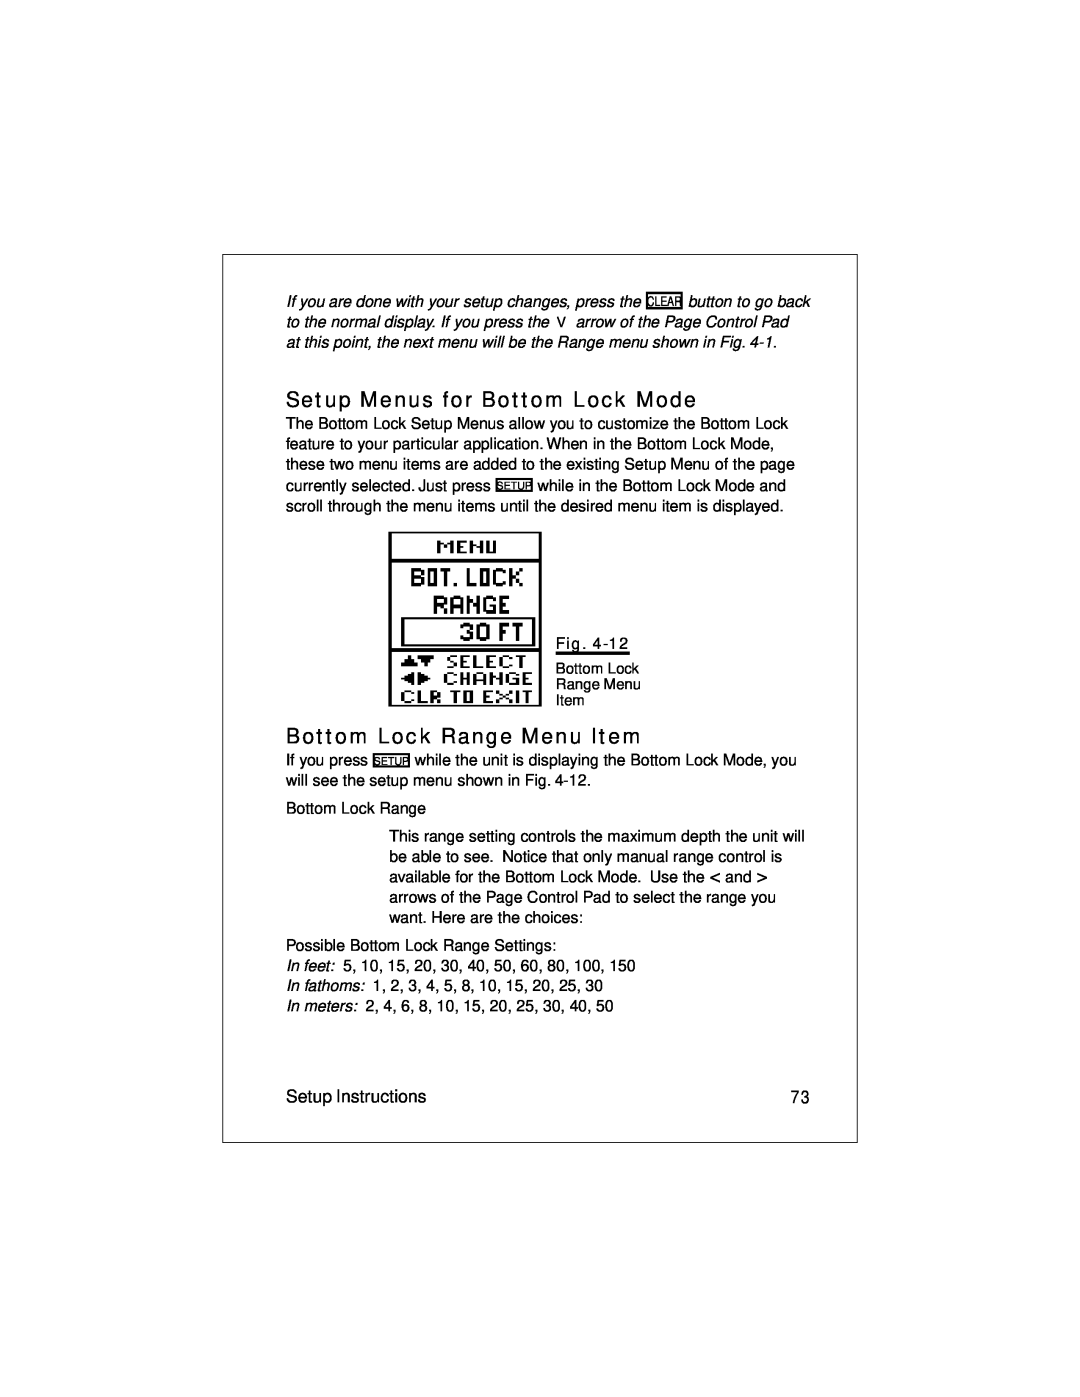 Raymarine L470 instruction manual Setup Menus for Bottom Lock Mode, Bottom Lock Range Menu Item, Setup Instructions 